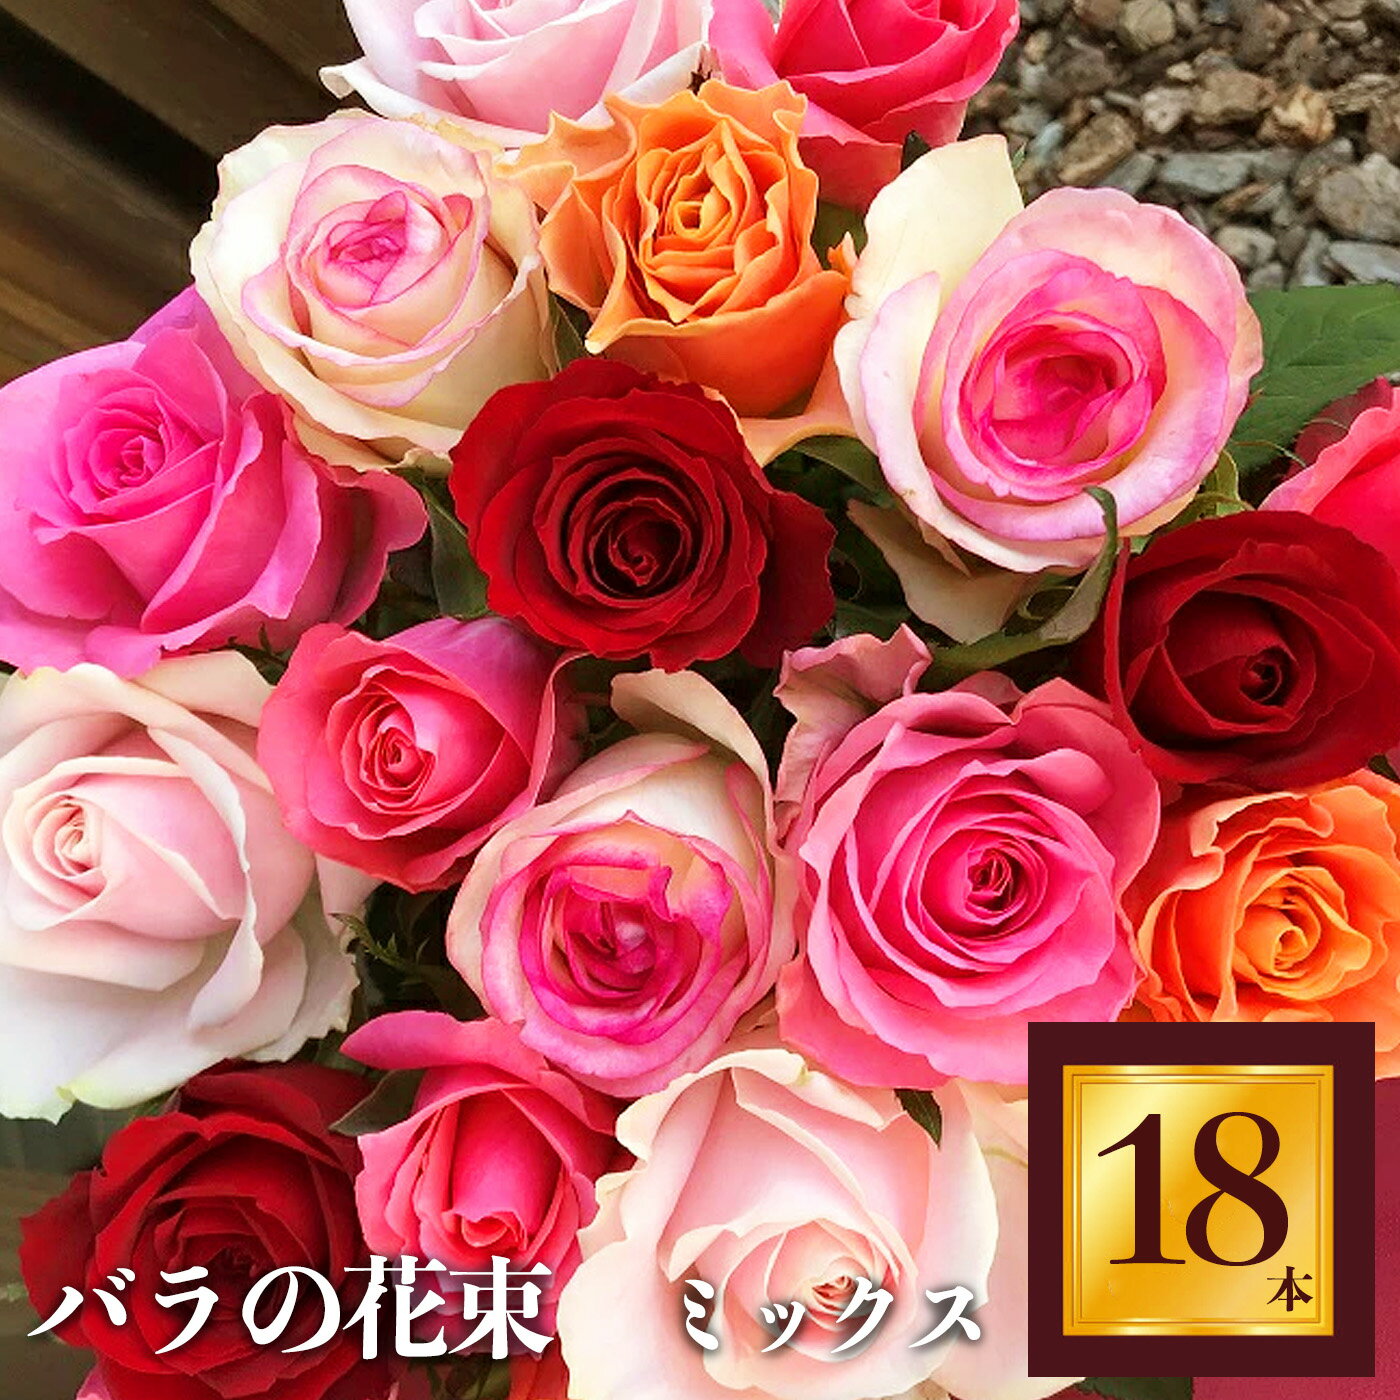 Heguri Rose バラの花束（18本）ローズ フラワー 新鮮 高品質 豪華 綺麗 平群のバラ 花束 平群ブランド 誕生日 記念日 お祝い